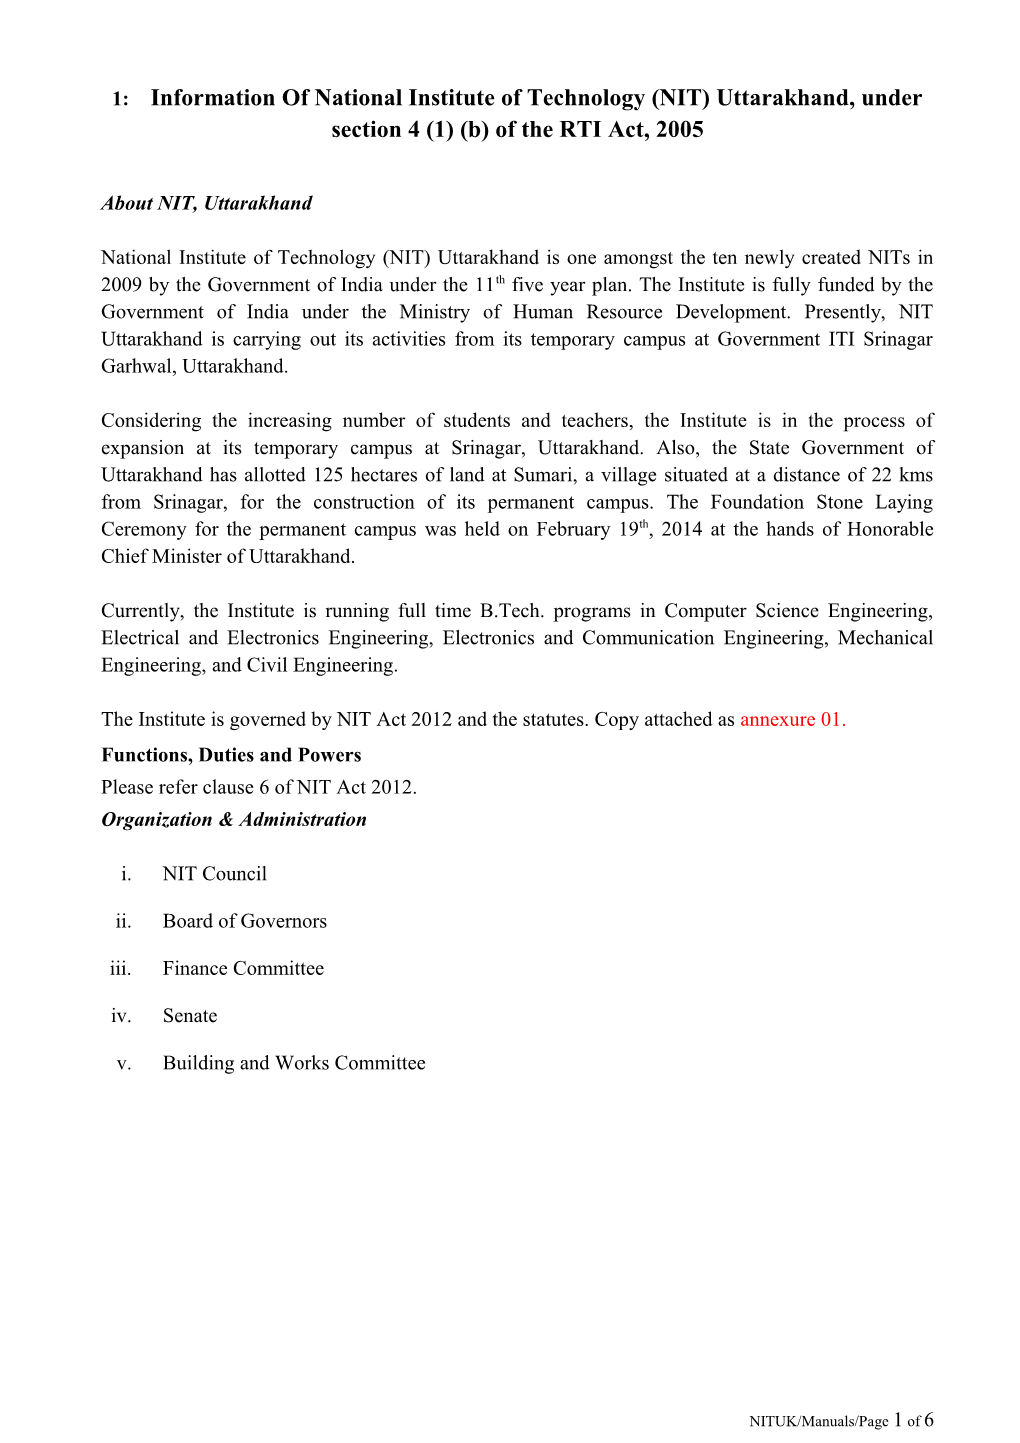 1:Information of National Institute of Technology (NIT) Uttarakhand, Under Section 4(1)